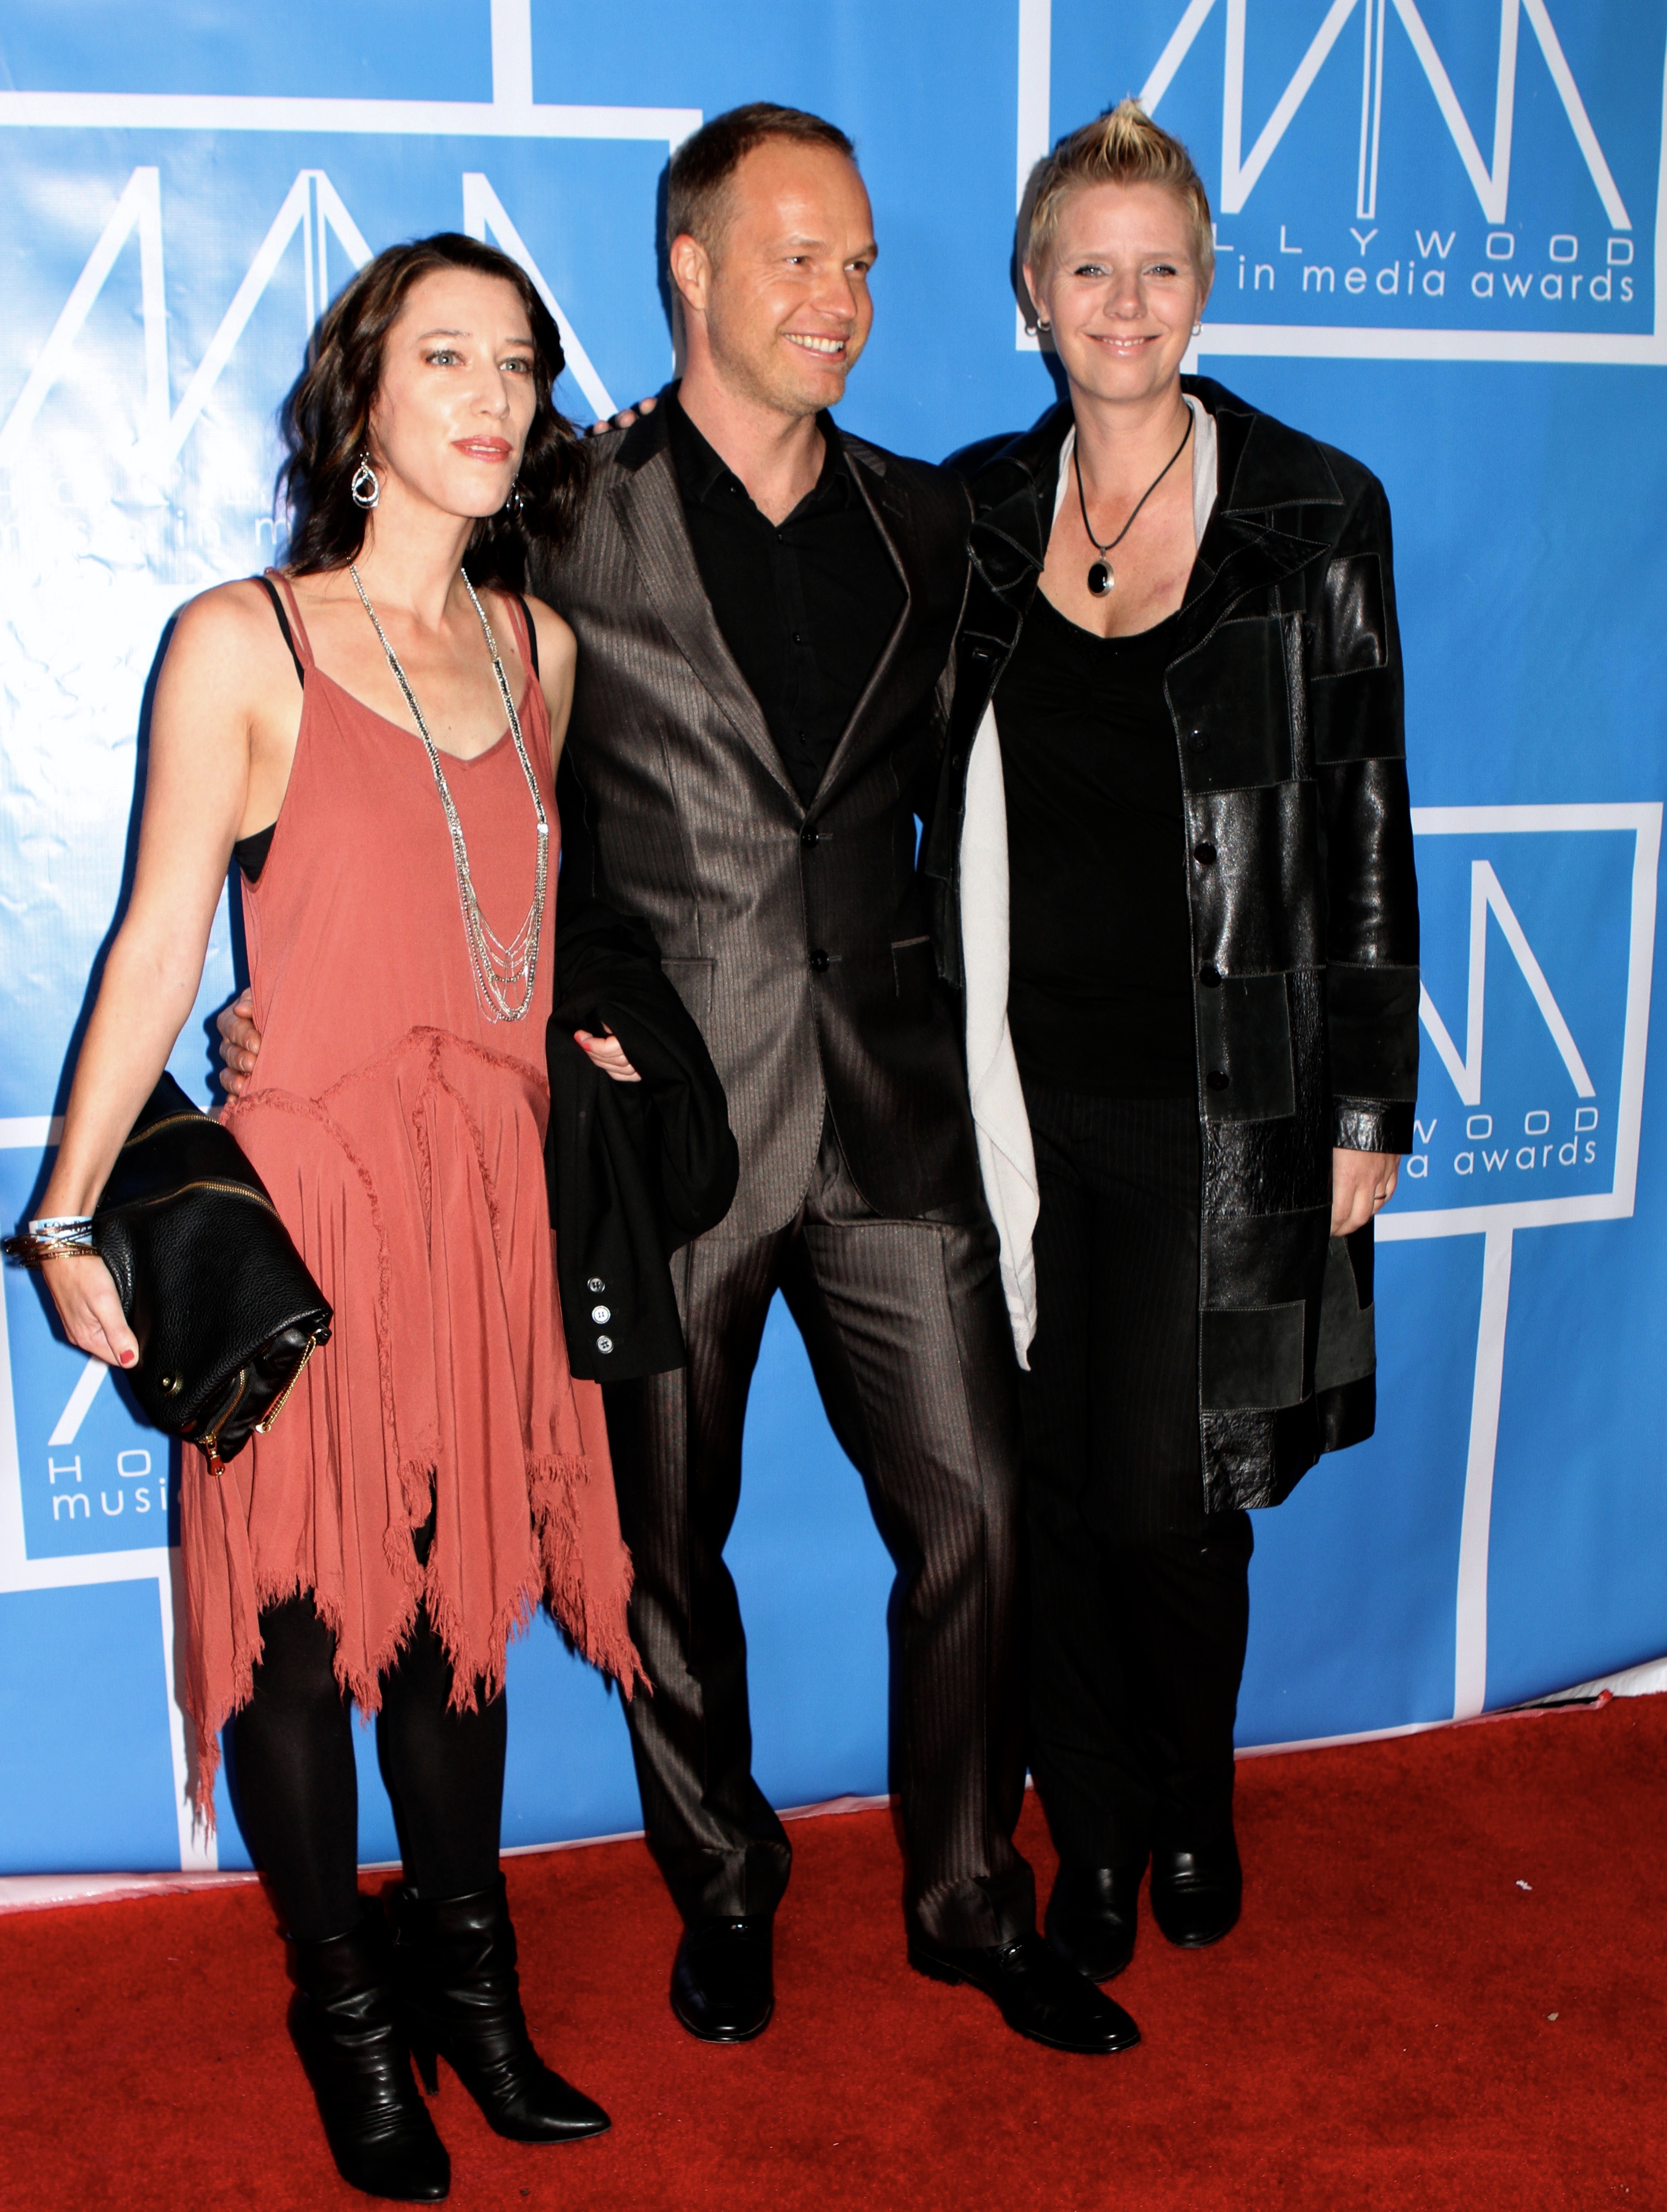 Dominique Schilling, Kim Planert,Caroline Risberg at the Hollywood Music in Media Awards